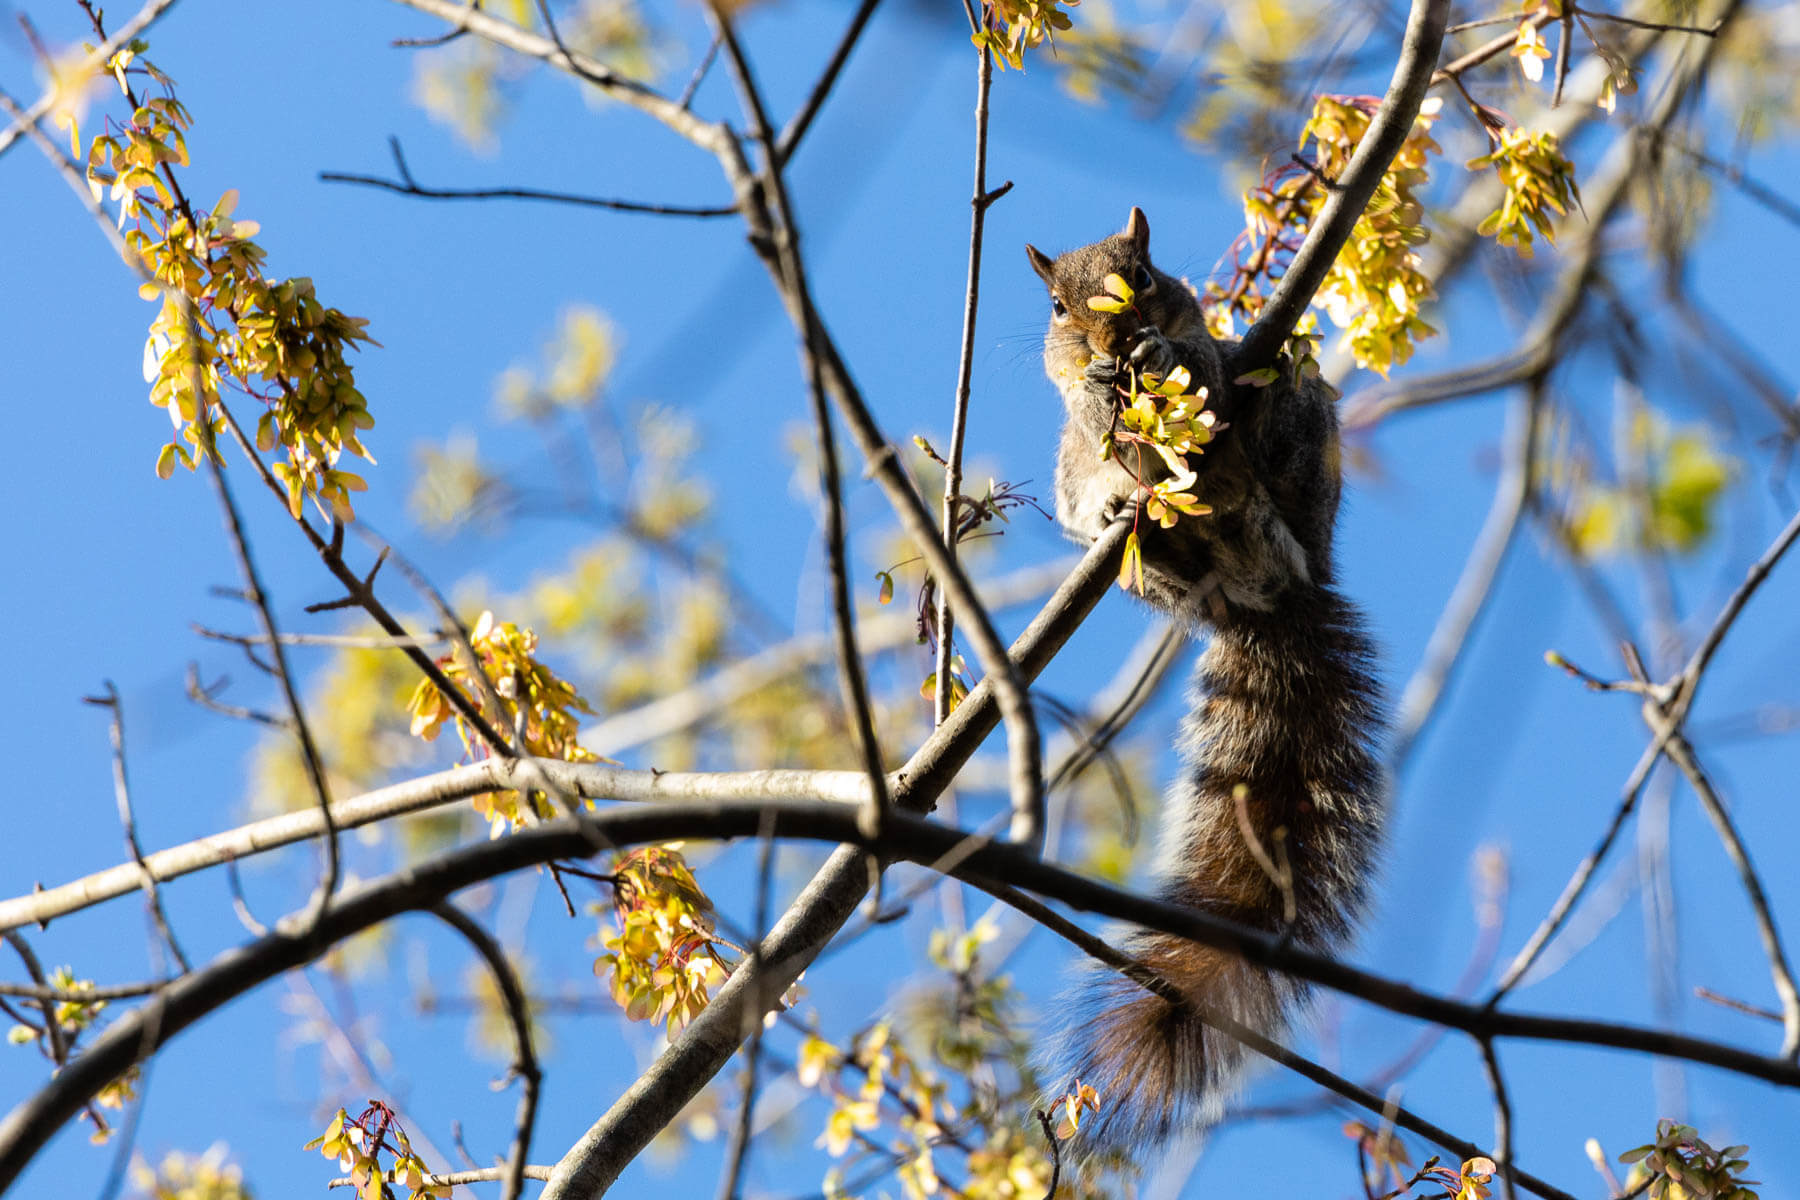 Squirrel in a high tree limb